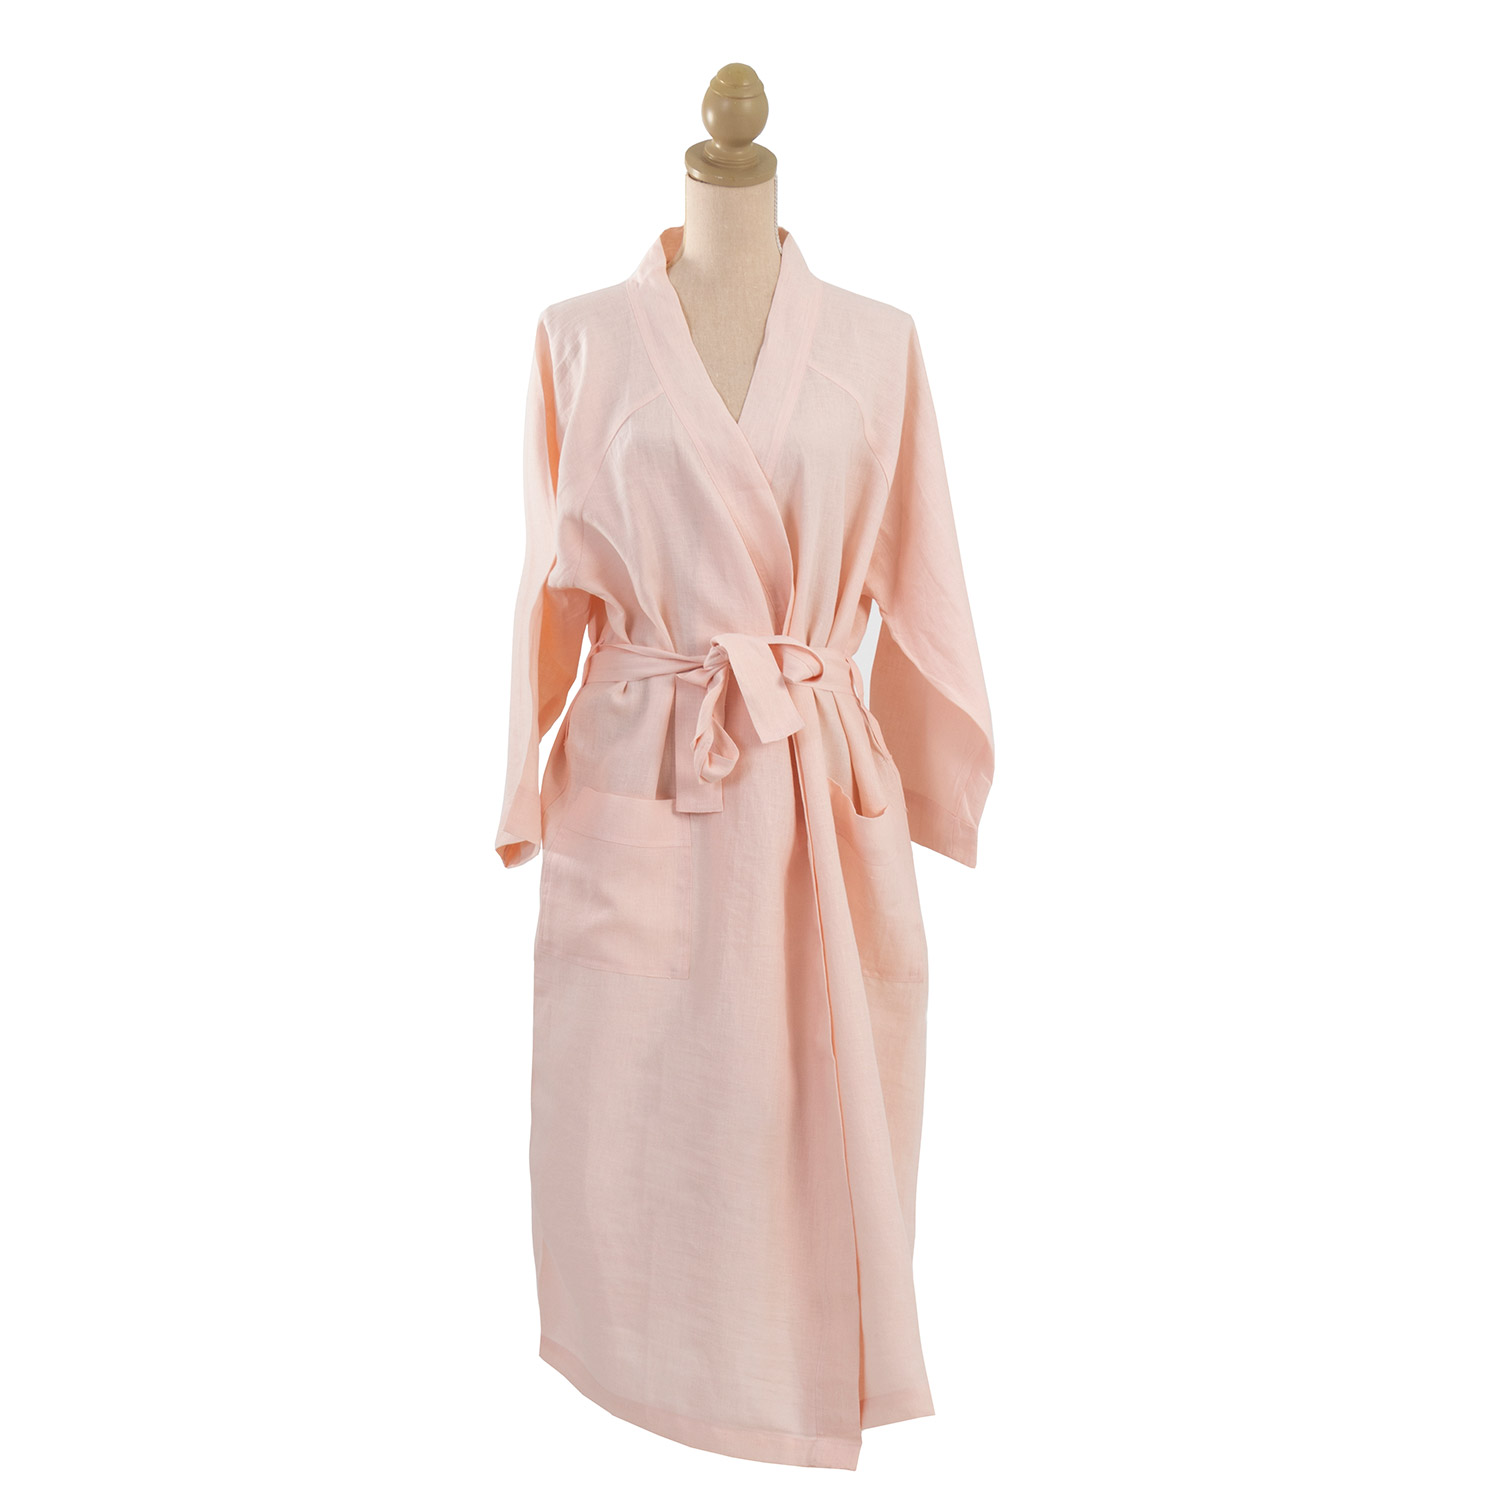 Blush Linen Robe